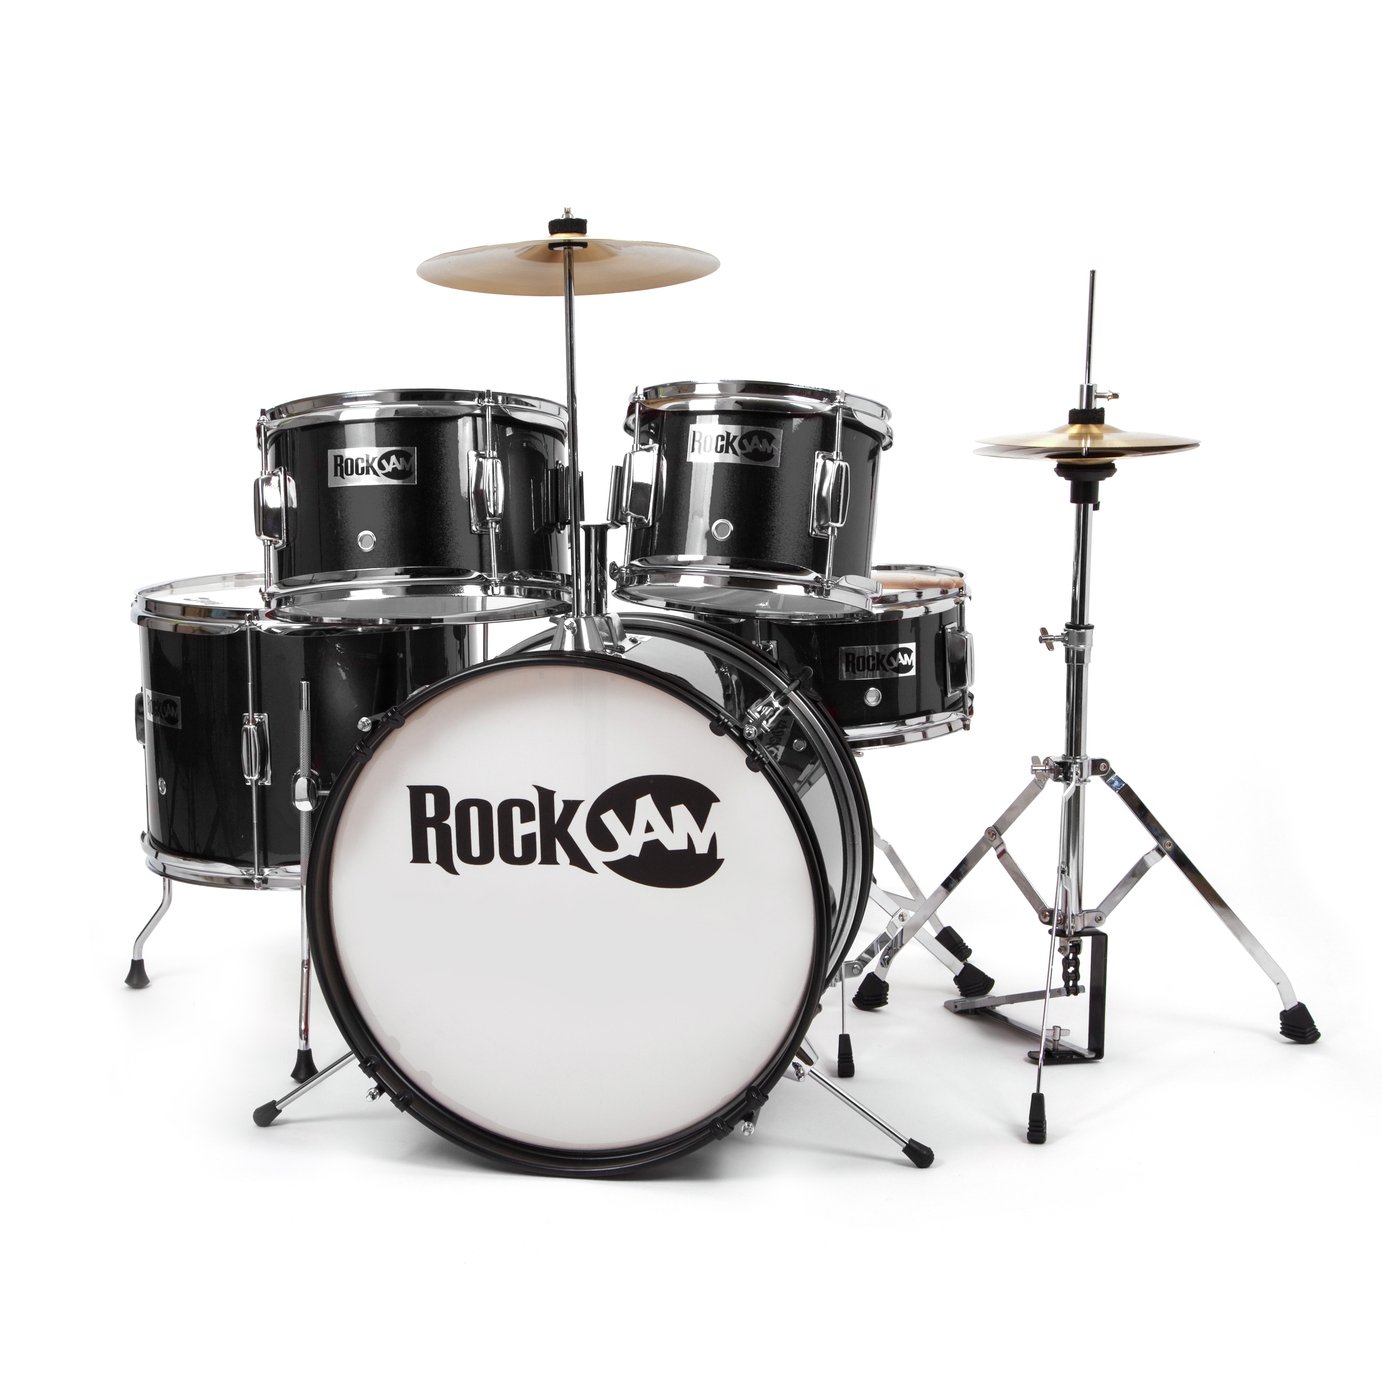 RockJam 5 Piece Junior Drum Kit Review